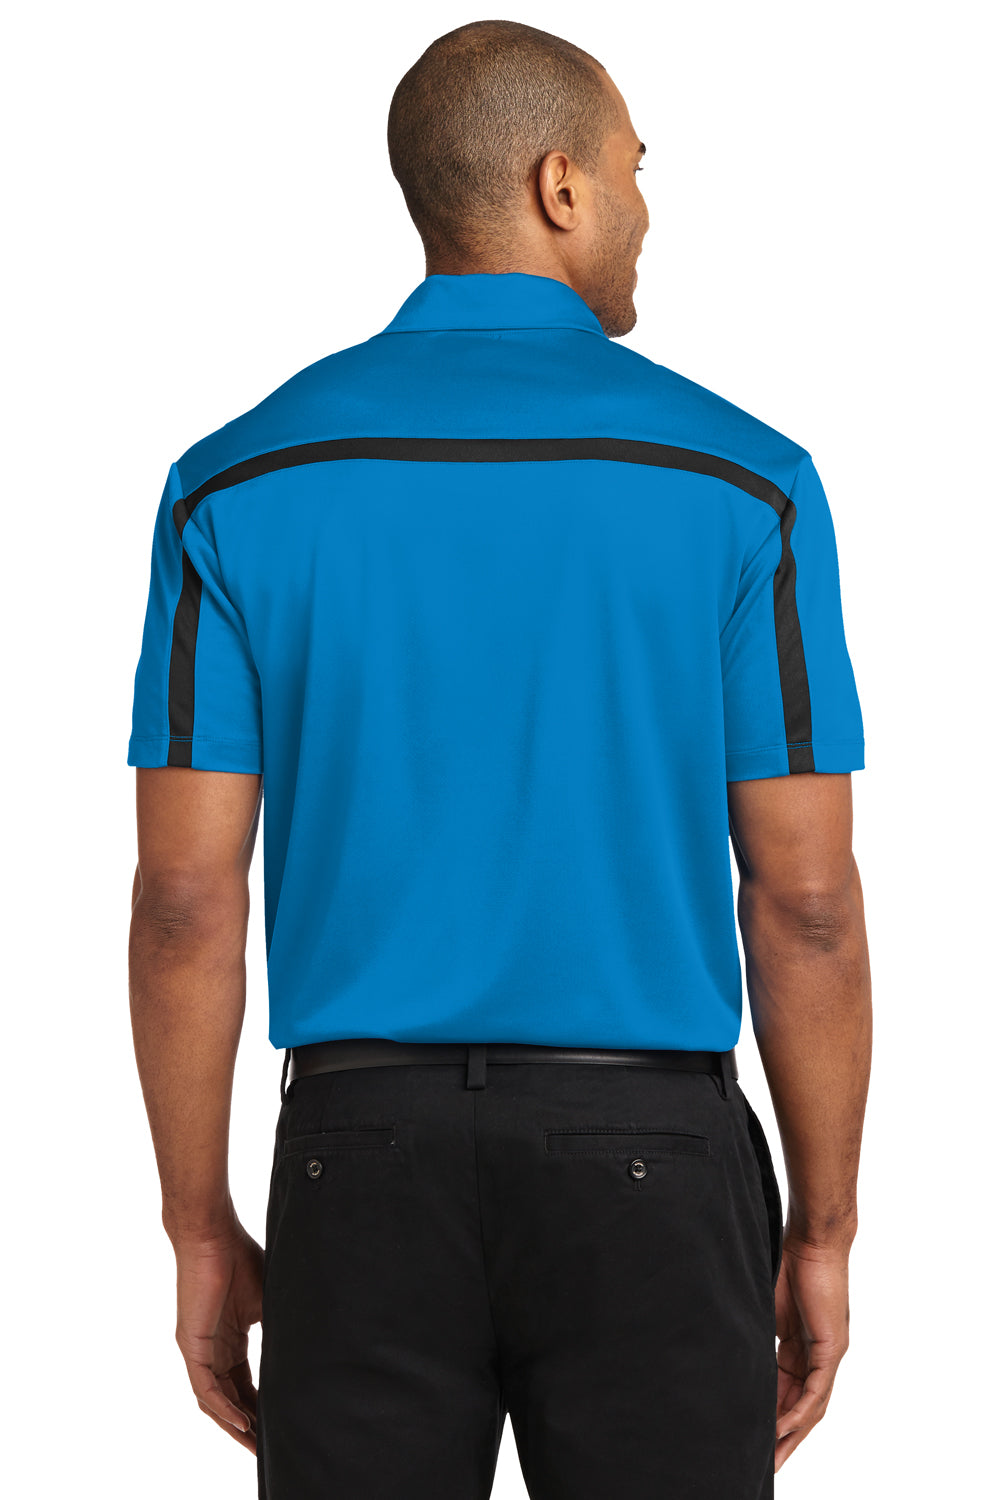 Port Authority K547 Mens Silk Touch Performance Moisture Wicking Short Sleeve Polo Shirt Brilliant Blue/Black Back